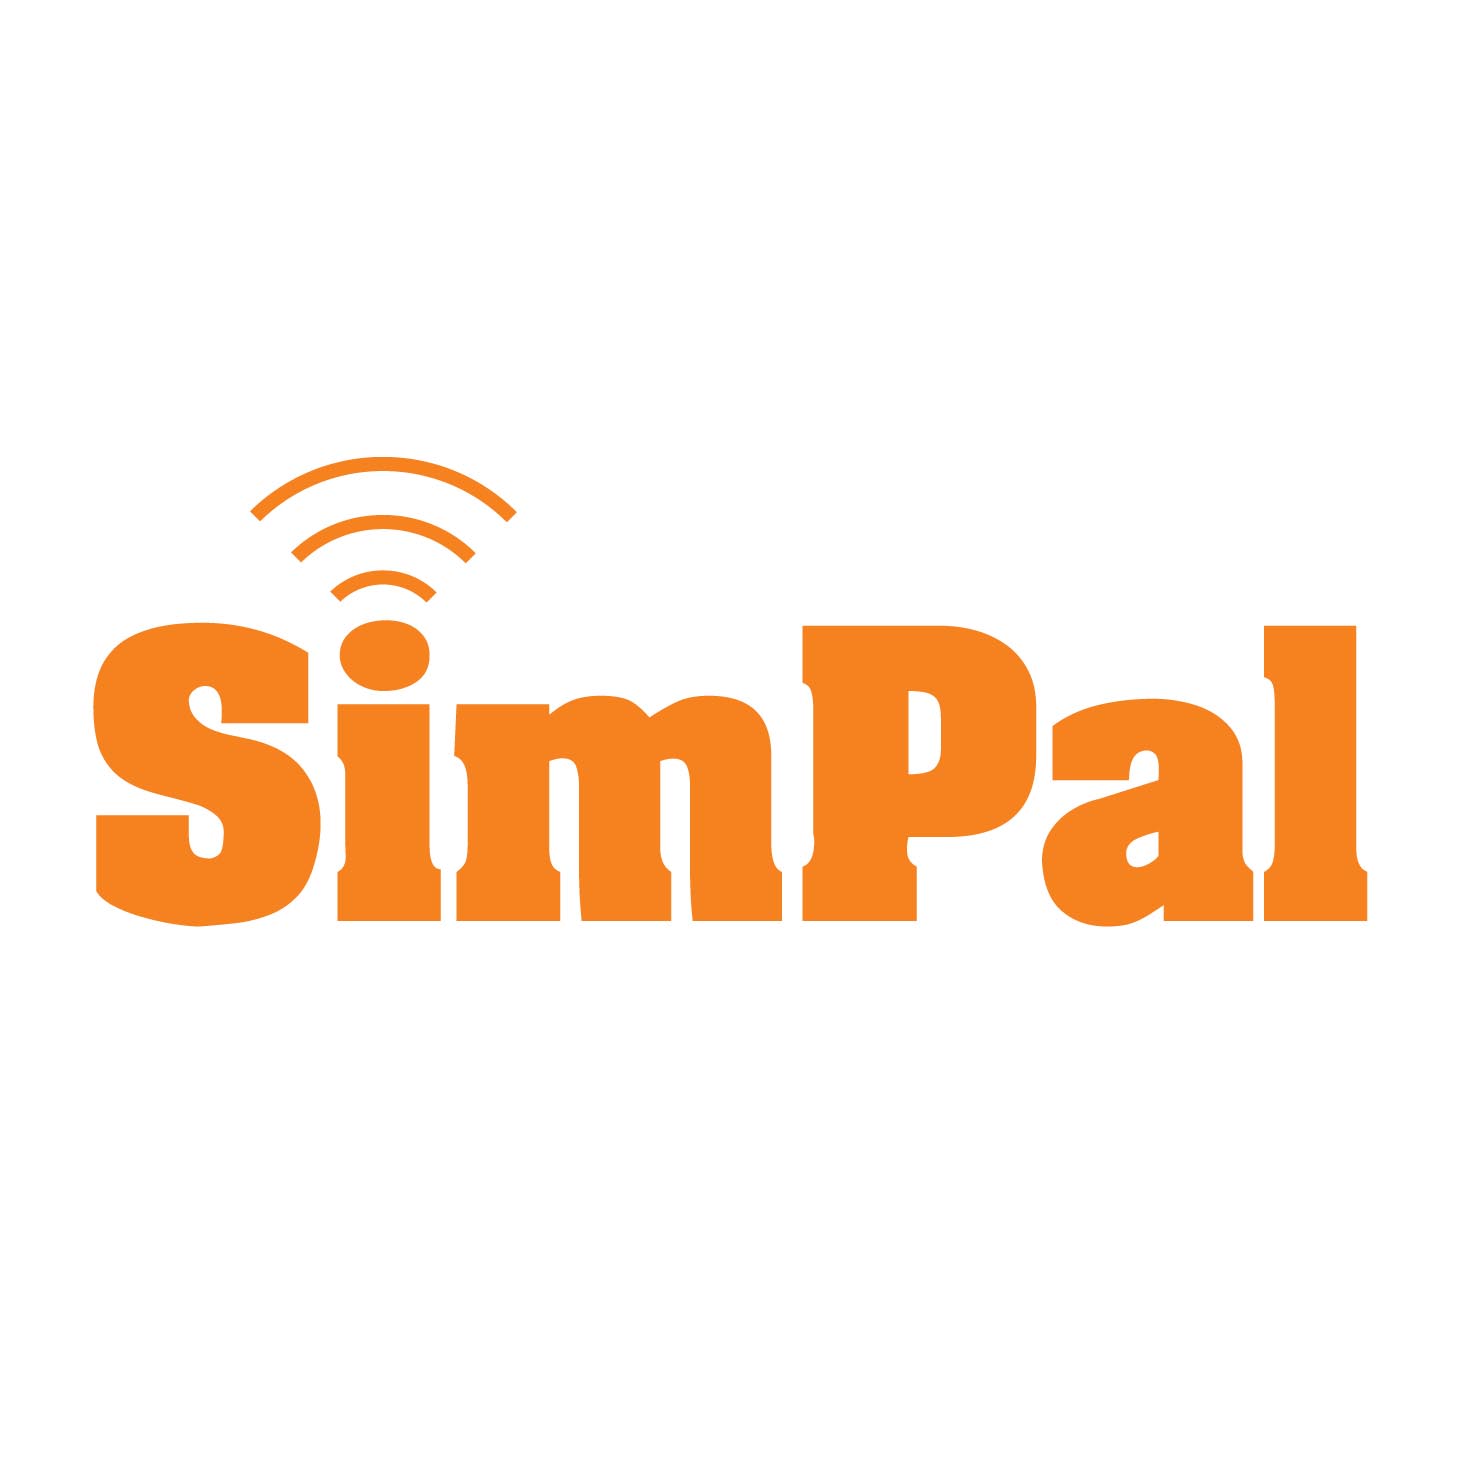 SimPal